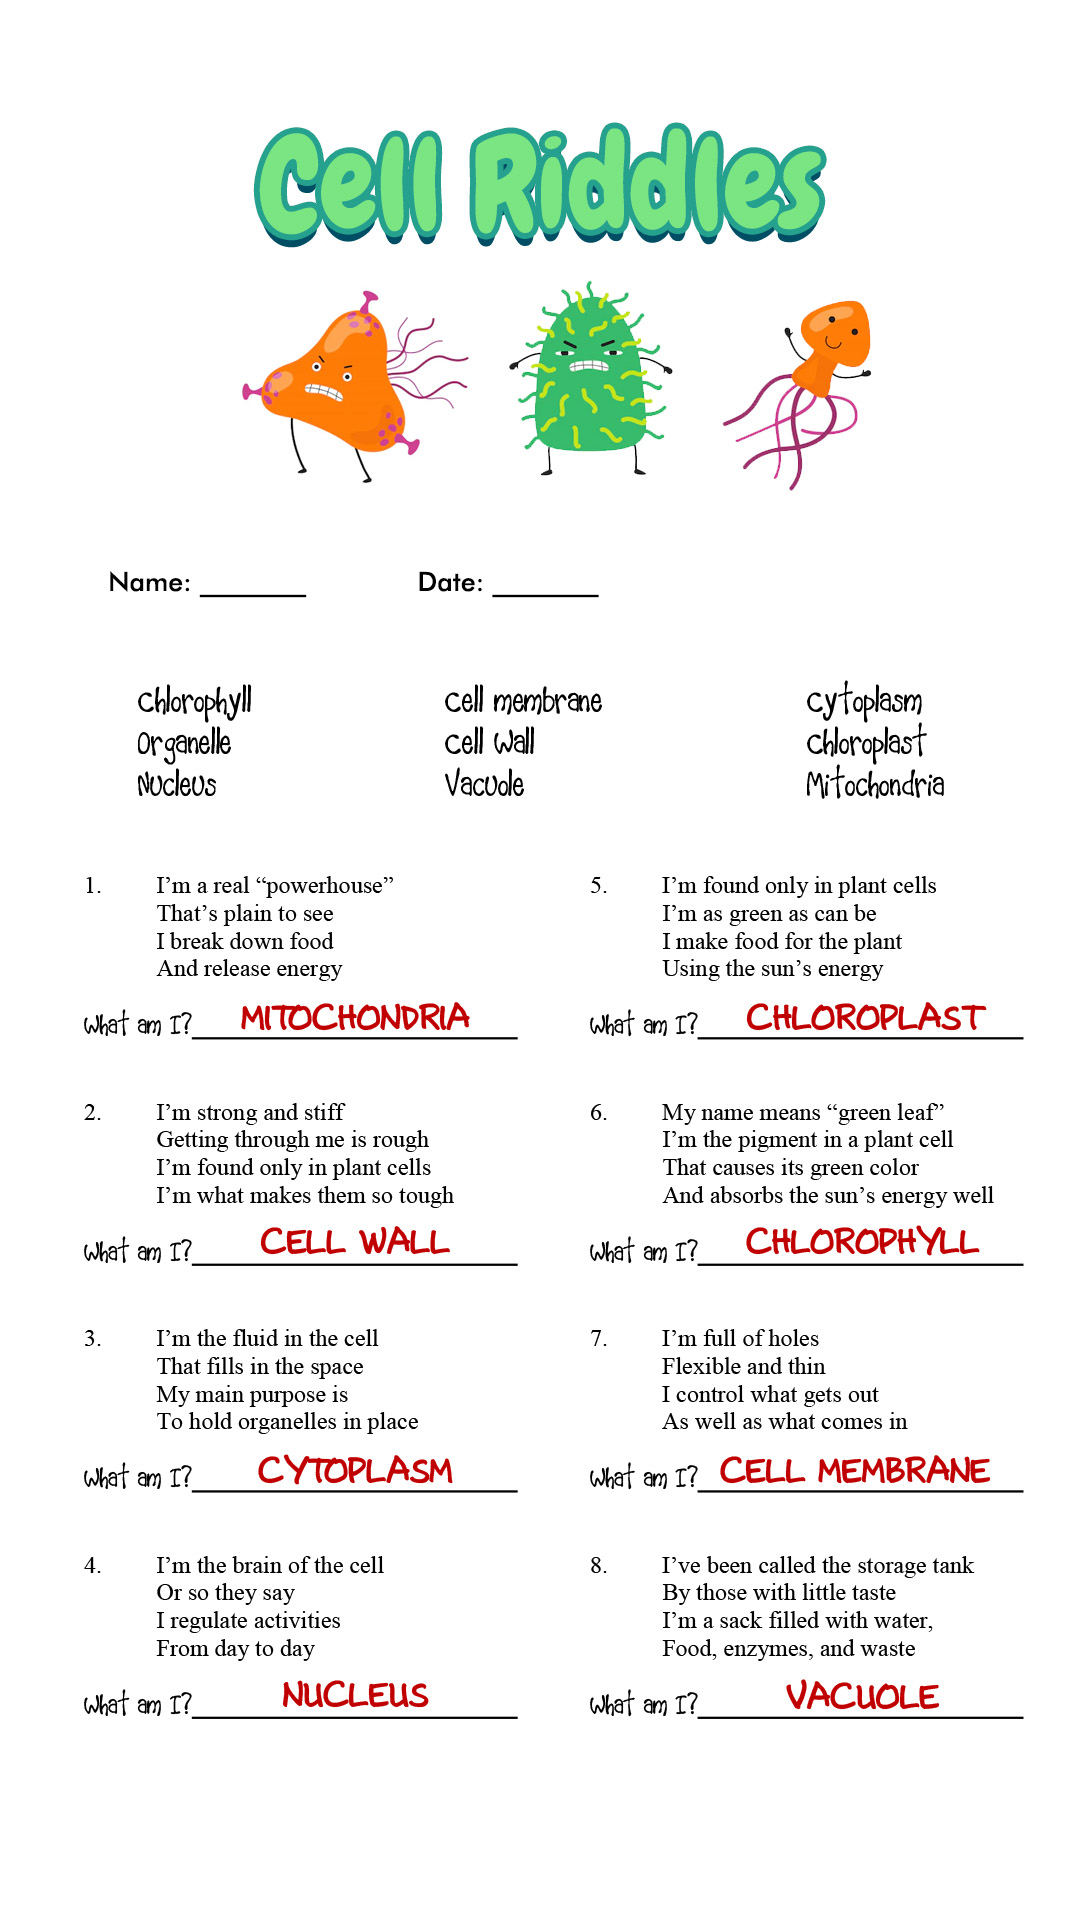 Prokaryotic and Eukaryotic Cells Worksheet Answers